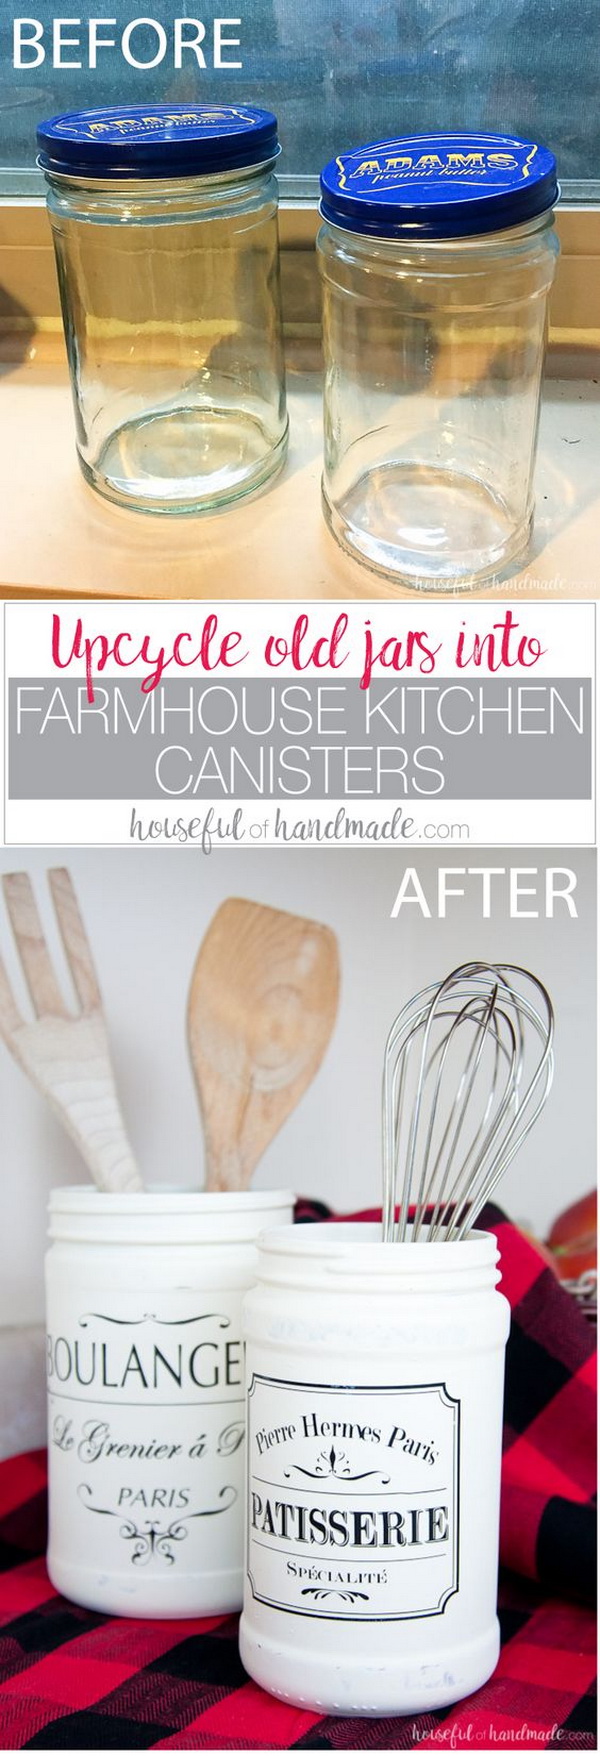 DIY Farmhouse Kitchen Canister from Mason Jars. 